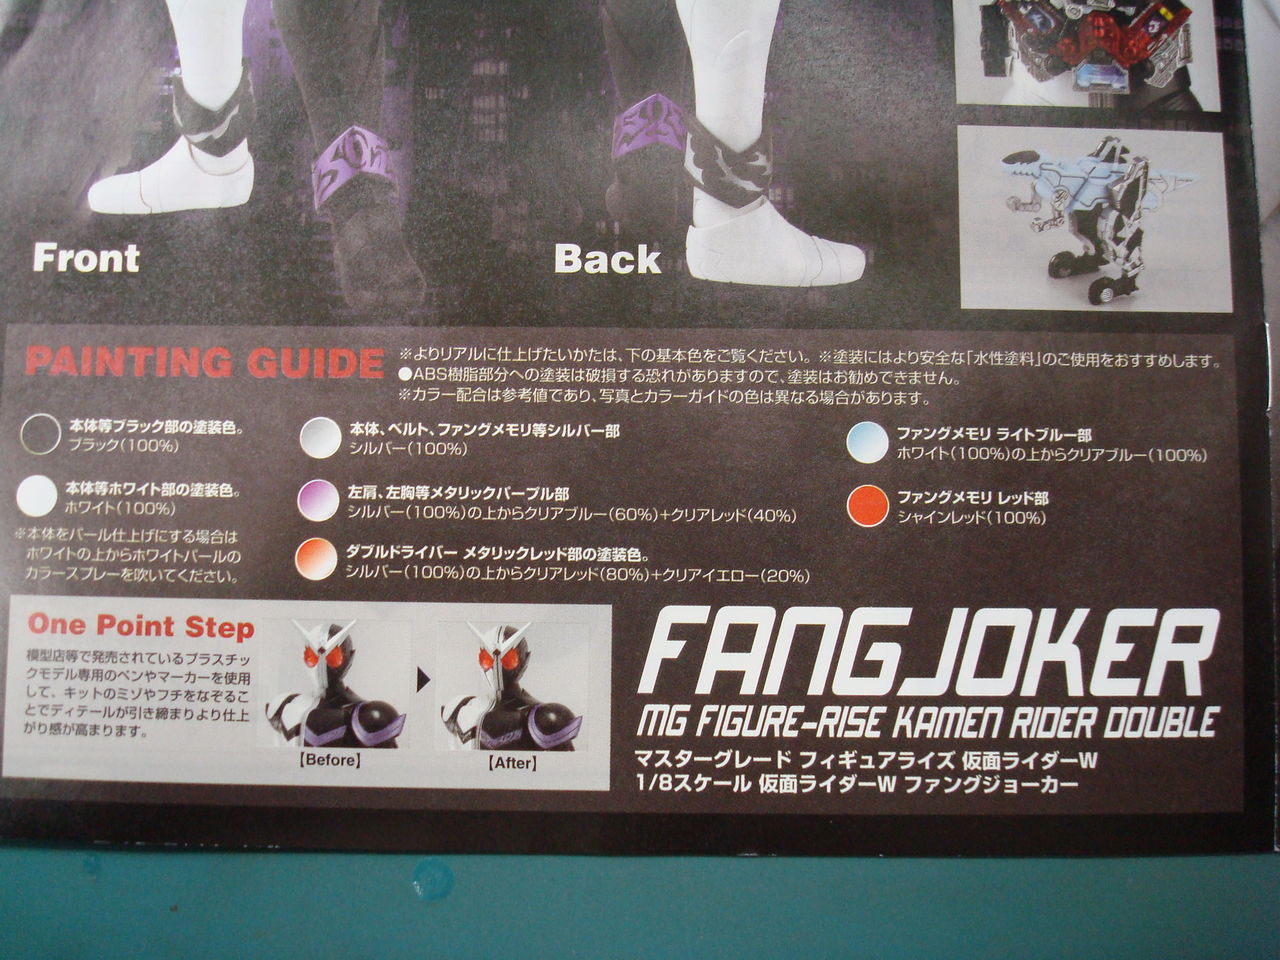 guNjap: Kit Review: 1/8 MG Figurerise Kamen Rider Fang Joker Hi Res Images